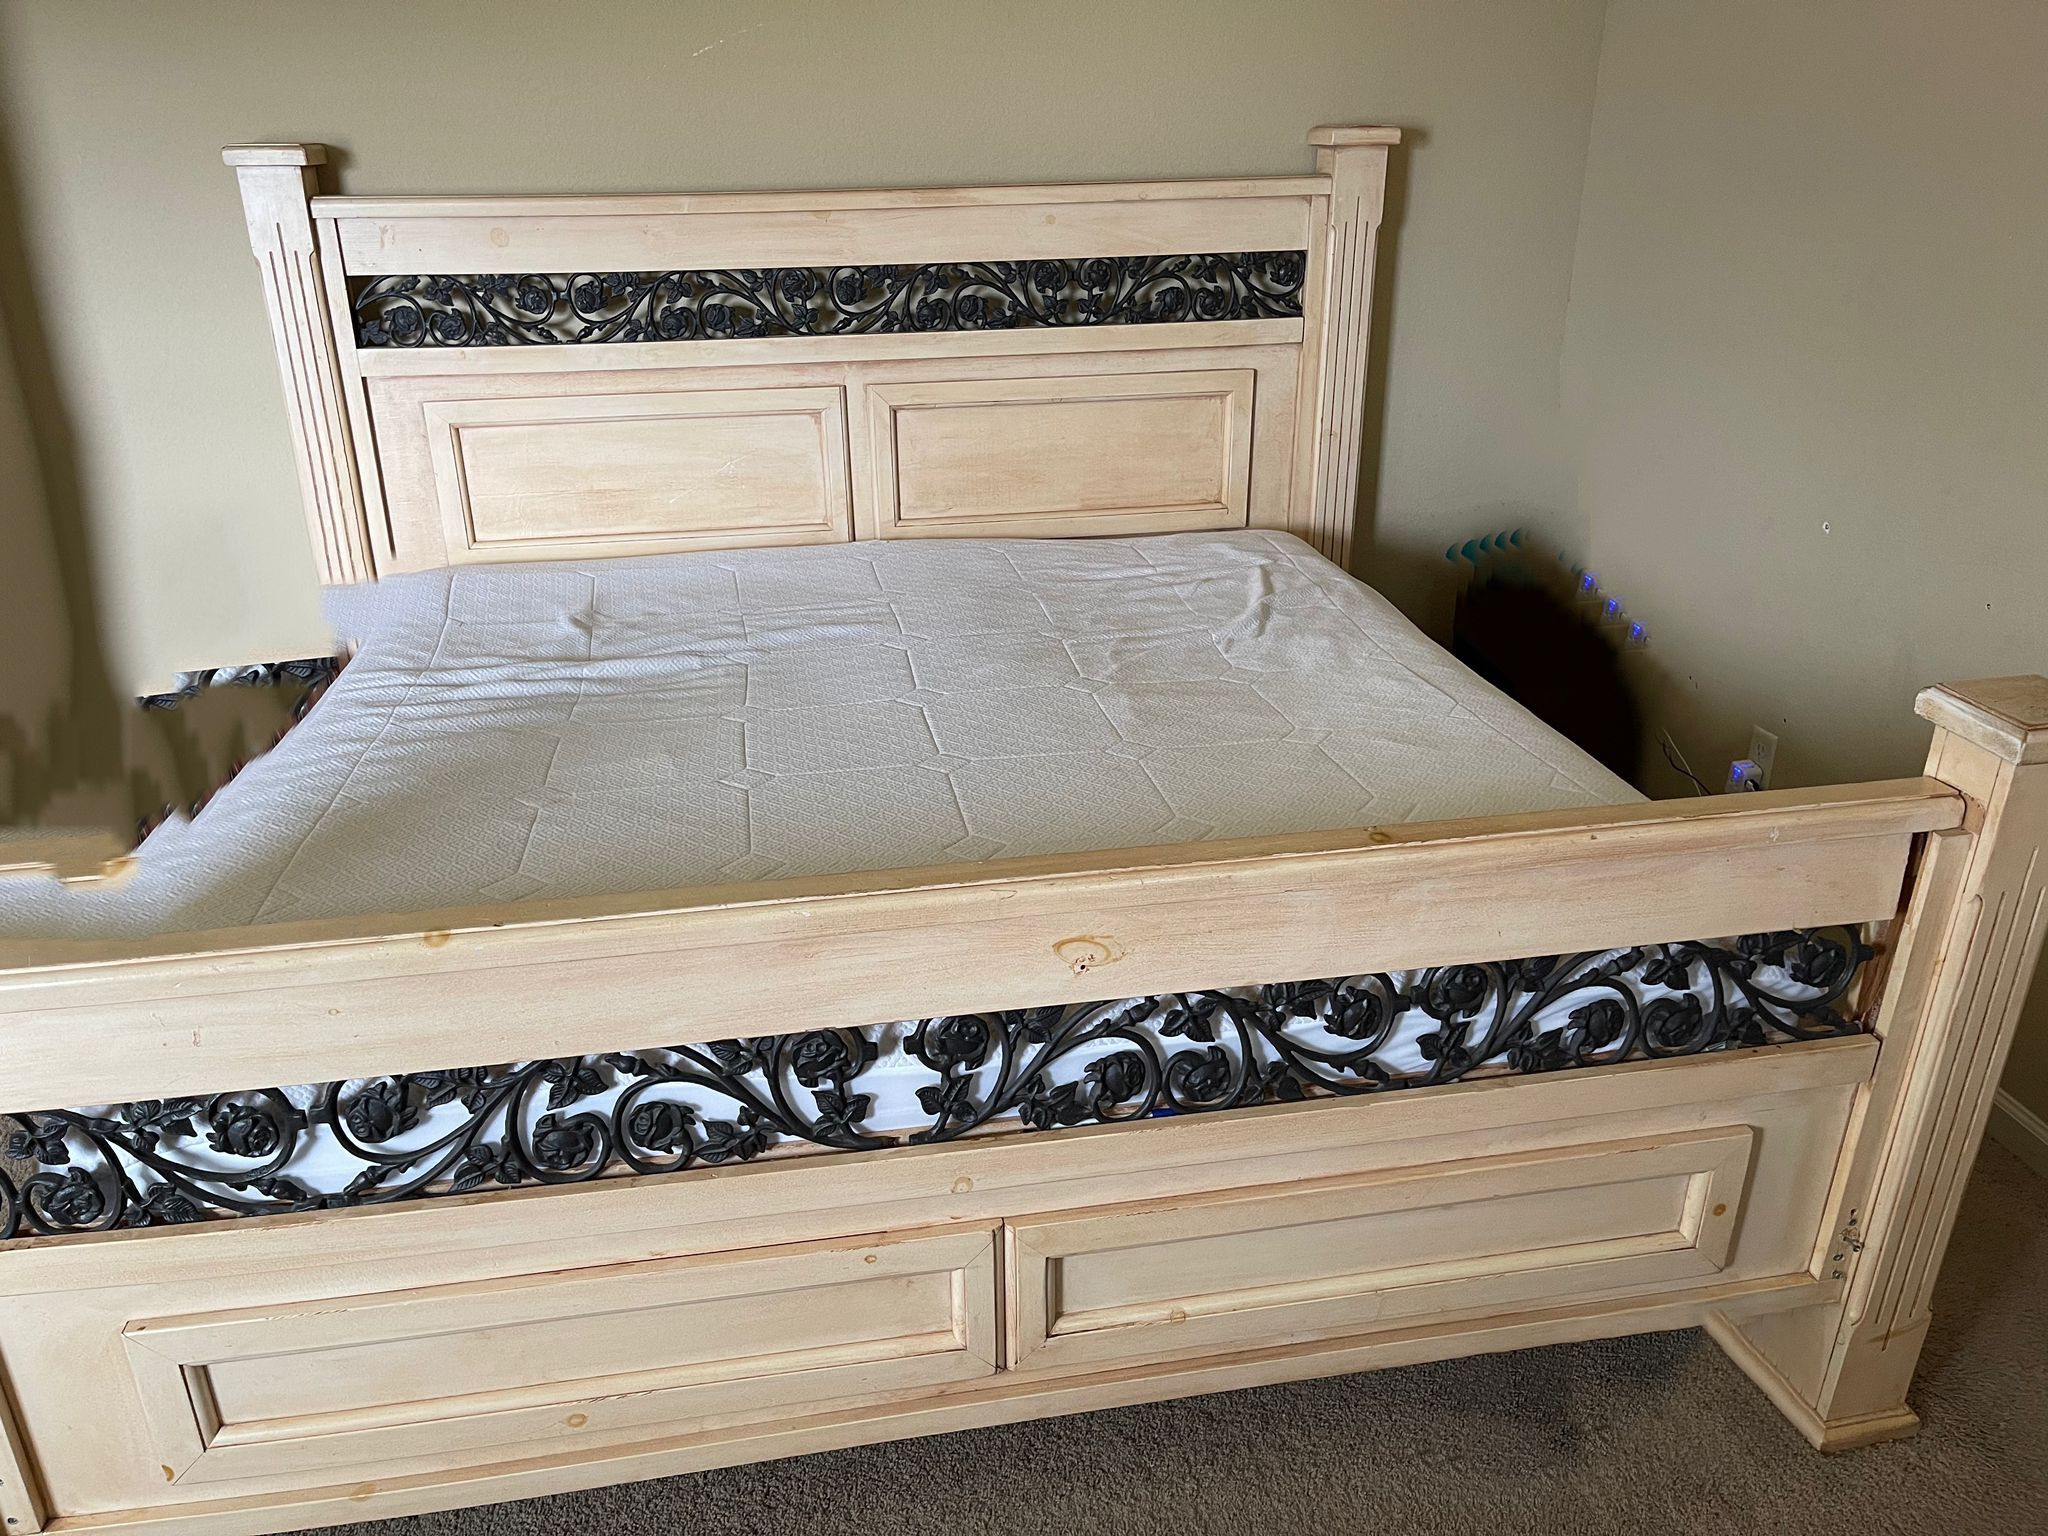 Complete bedroom set (Solid wood) $1500 Was Over $6K New Cabot, AR